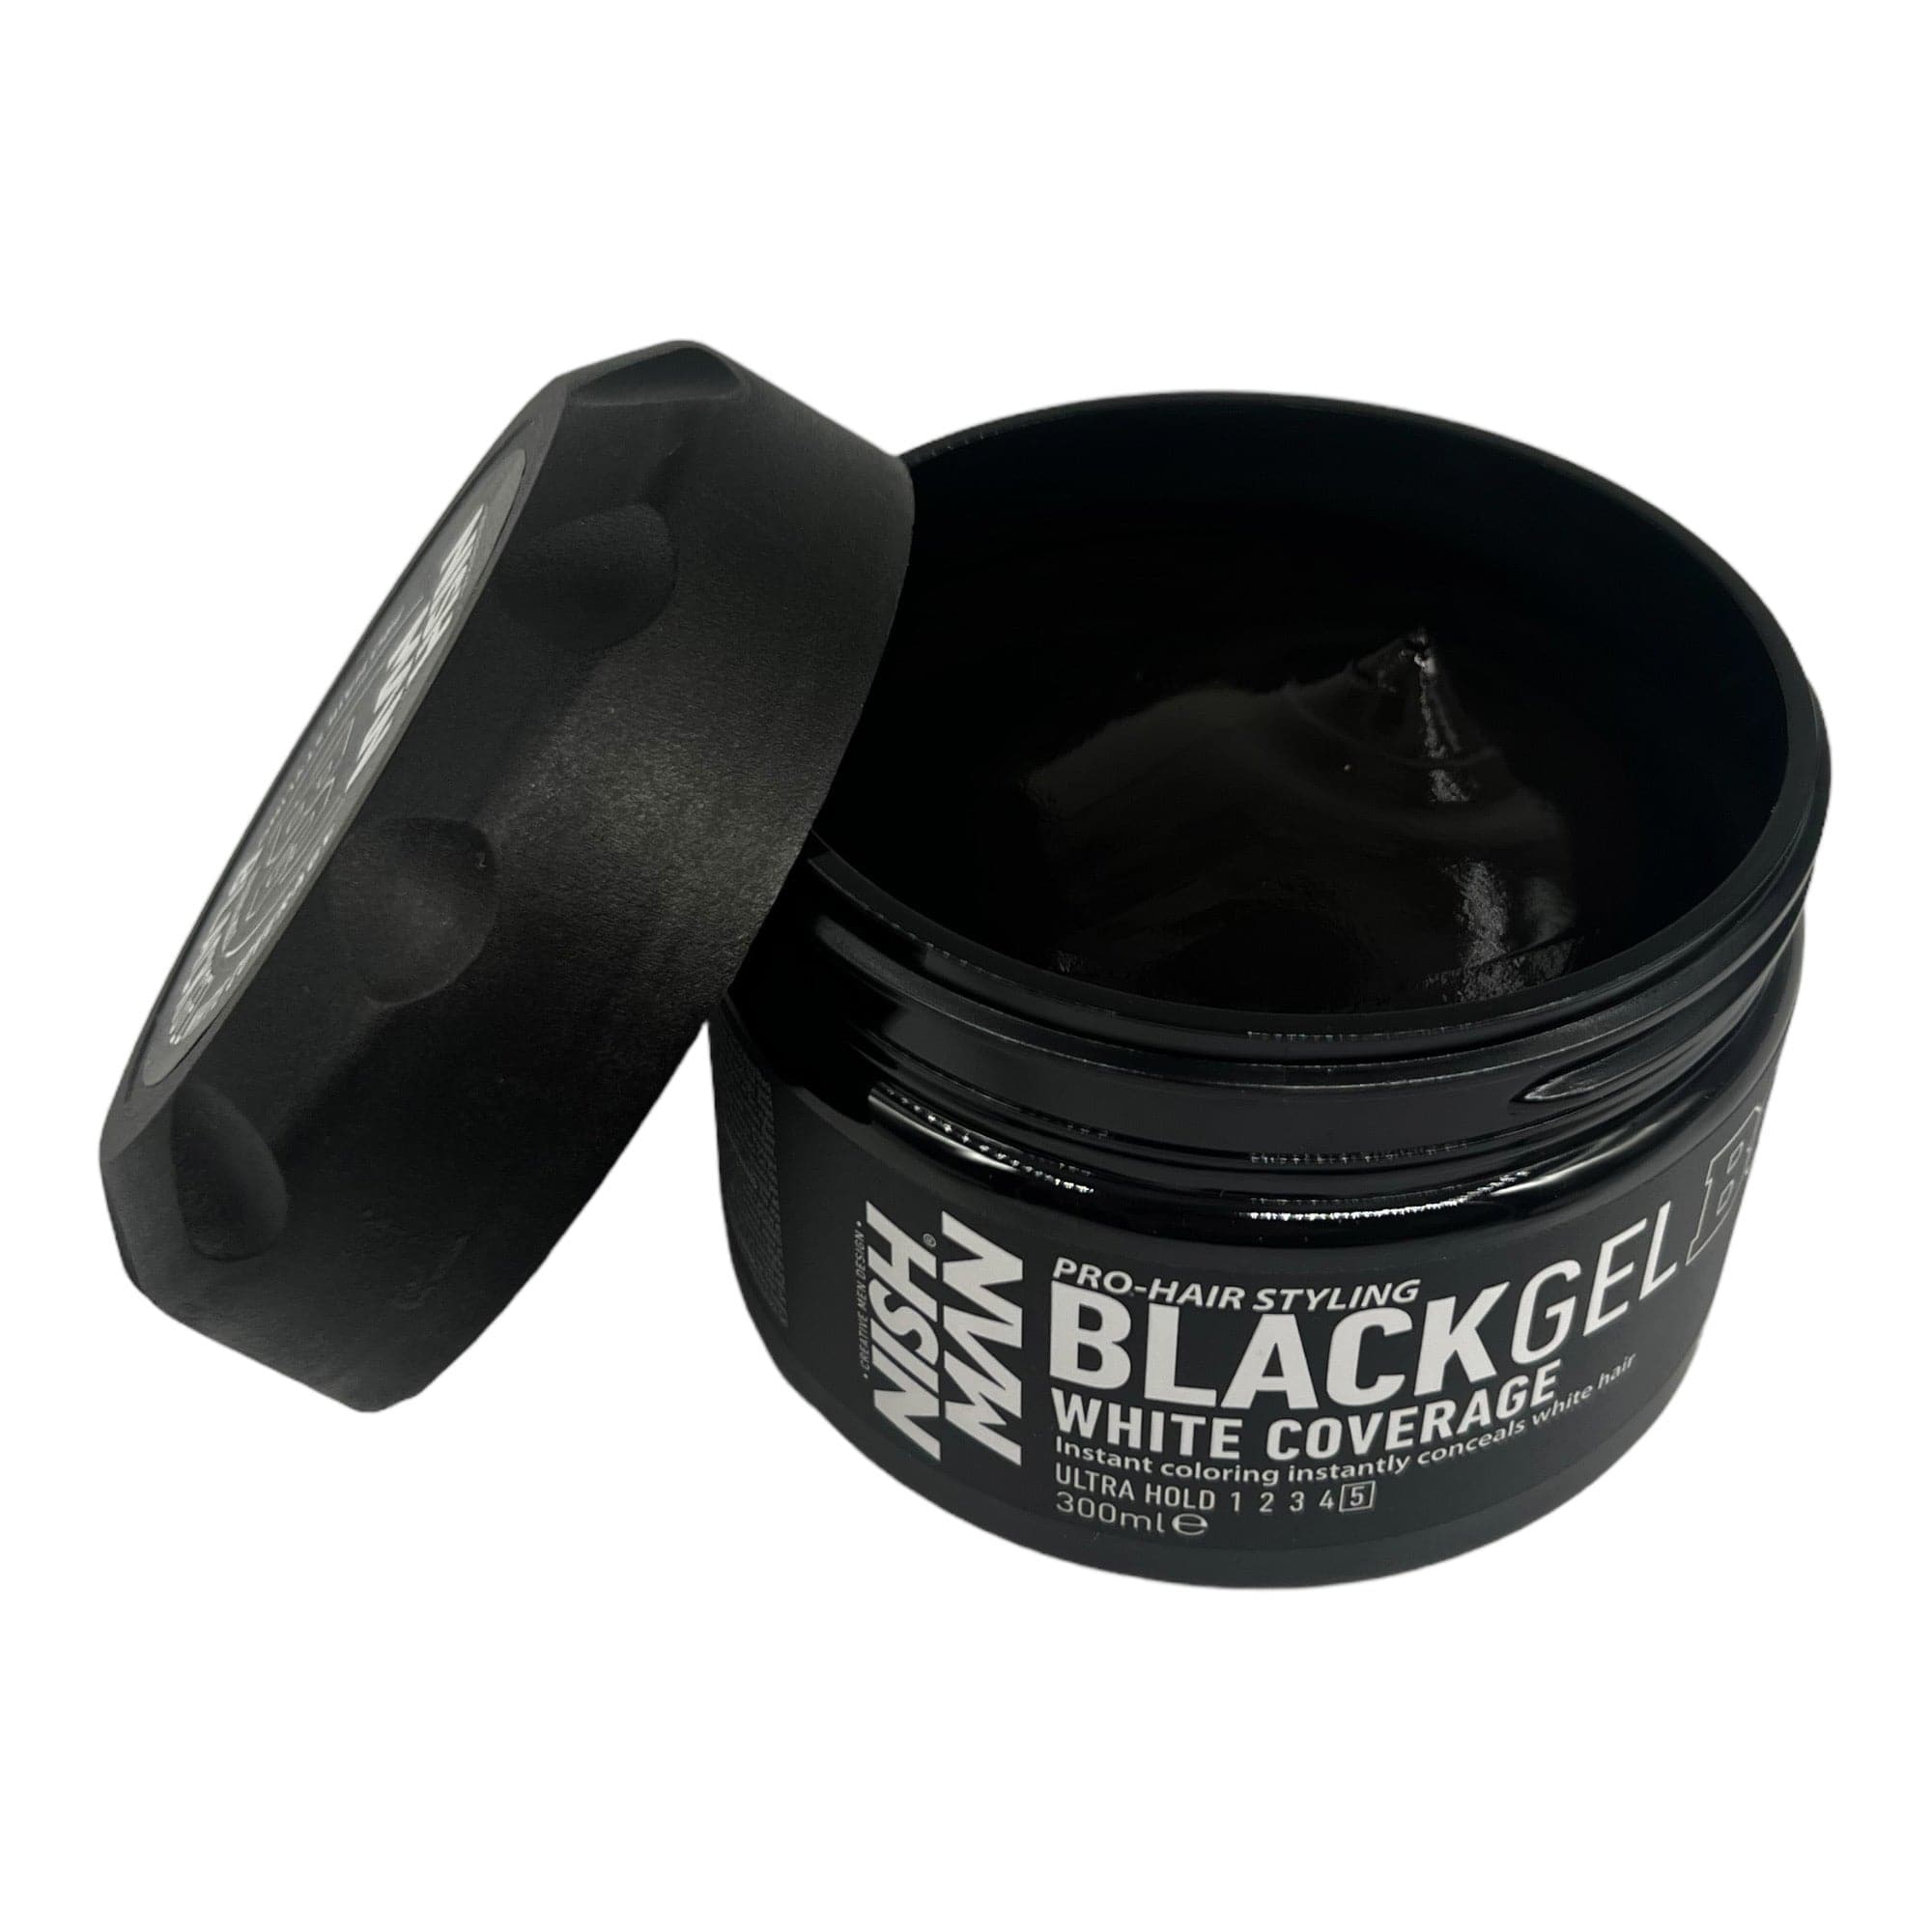 Nishman - Hair Styling Black Gel BG White Coverge 300ml